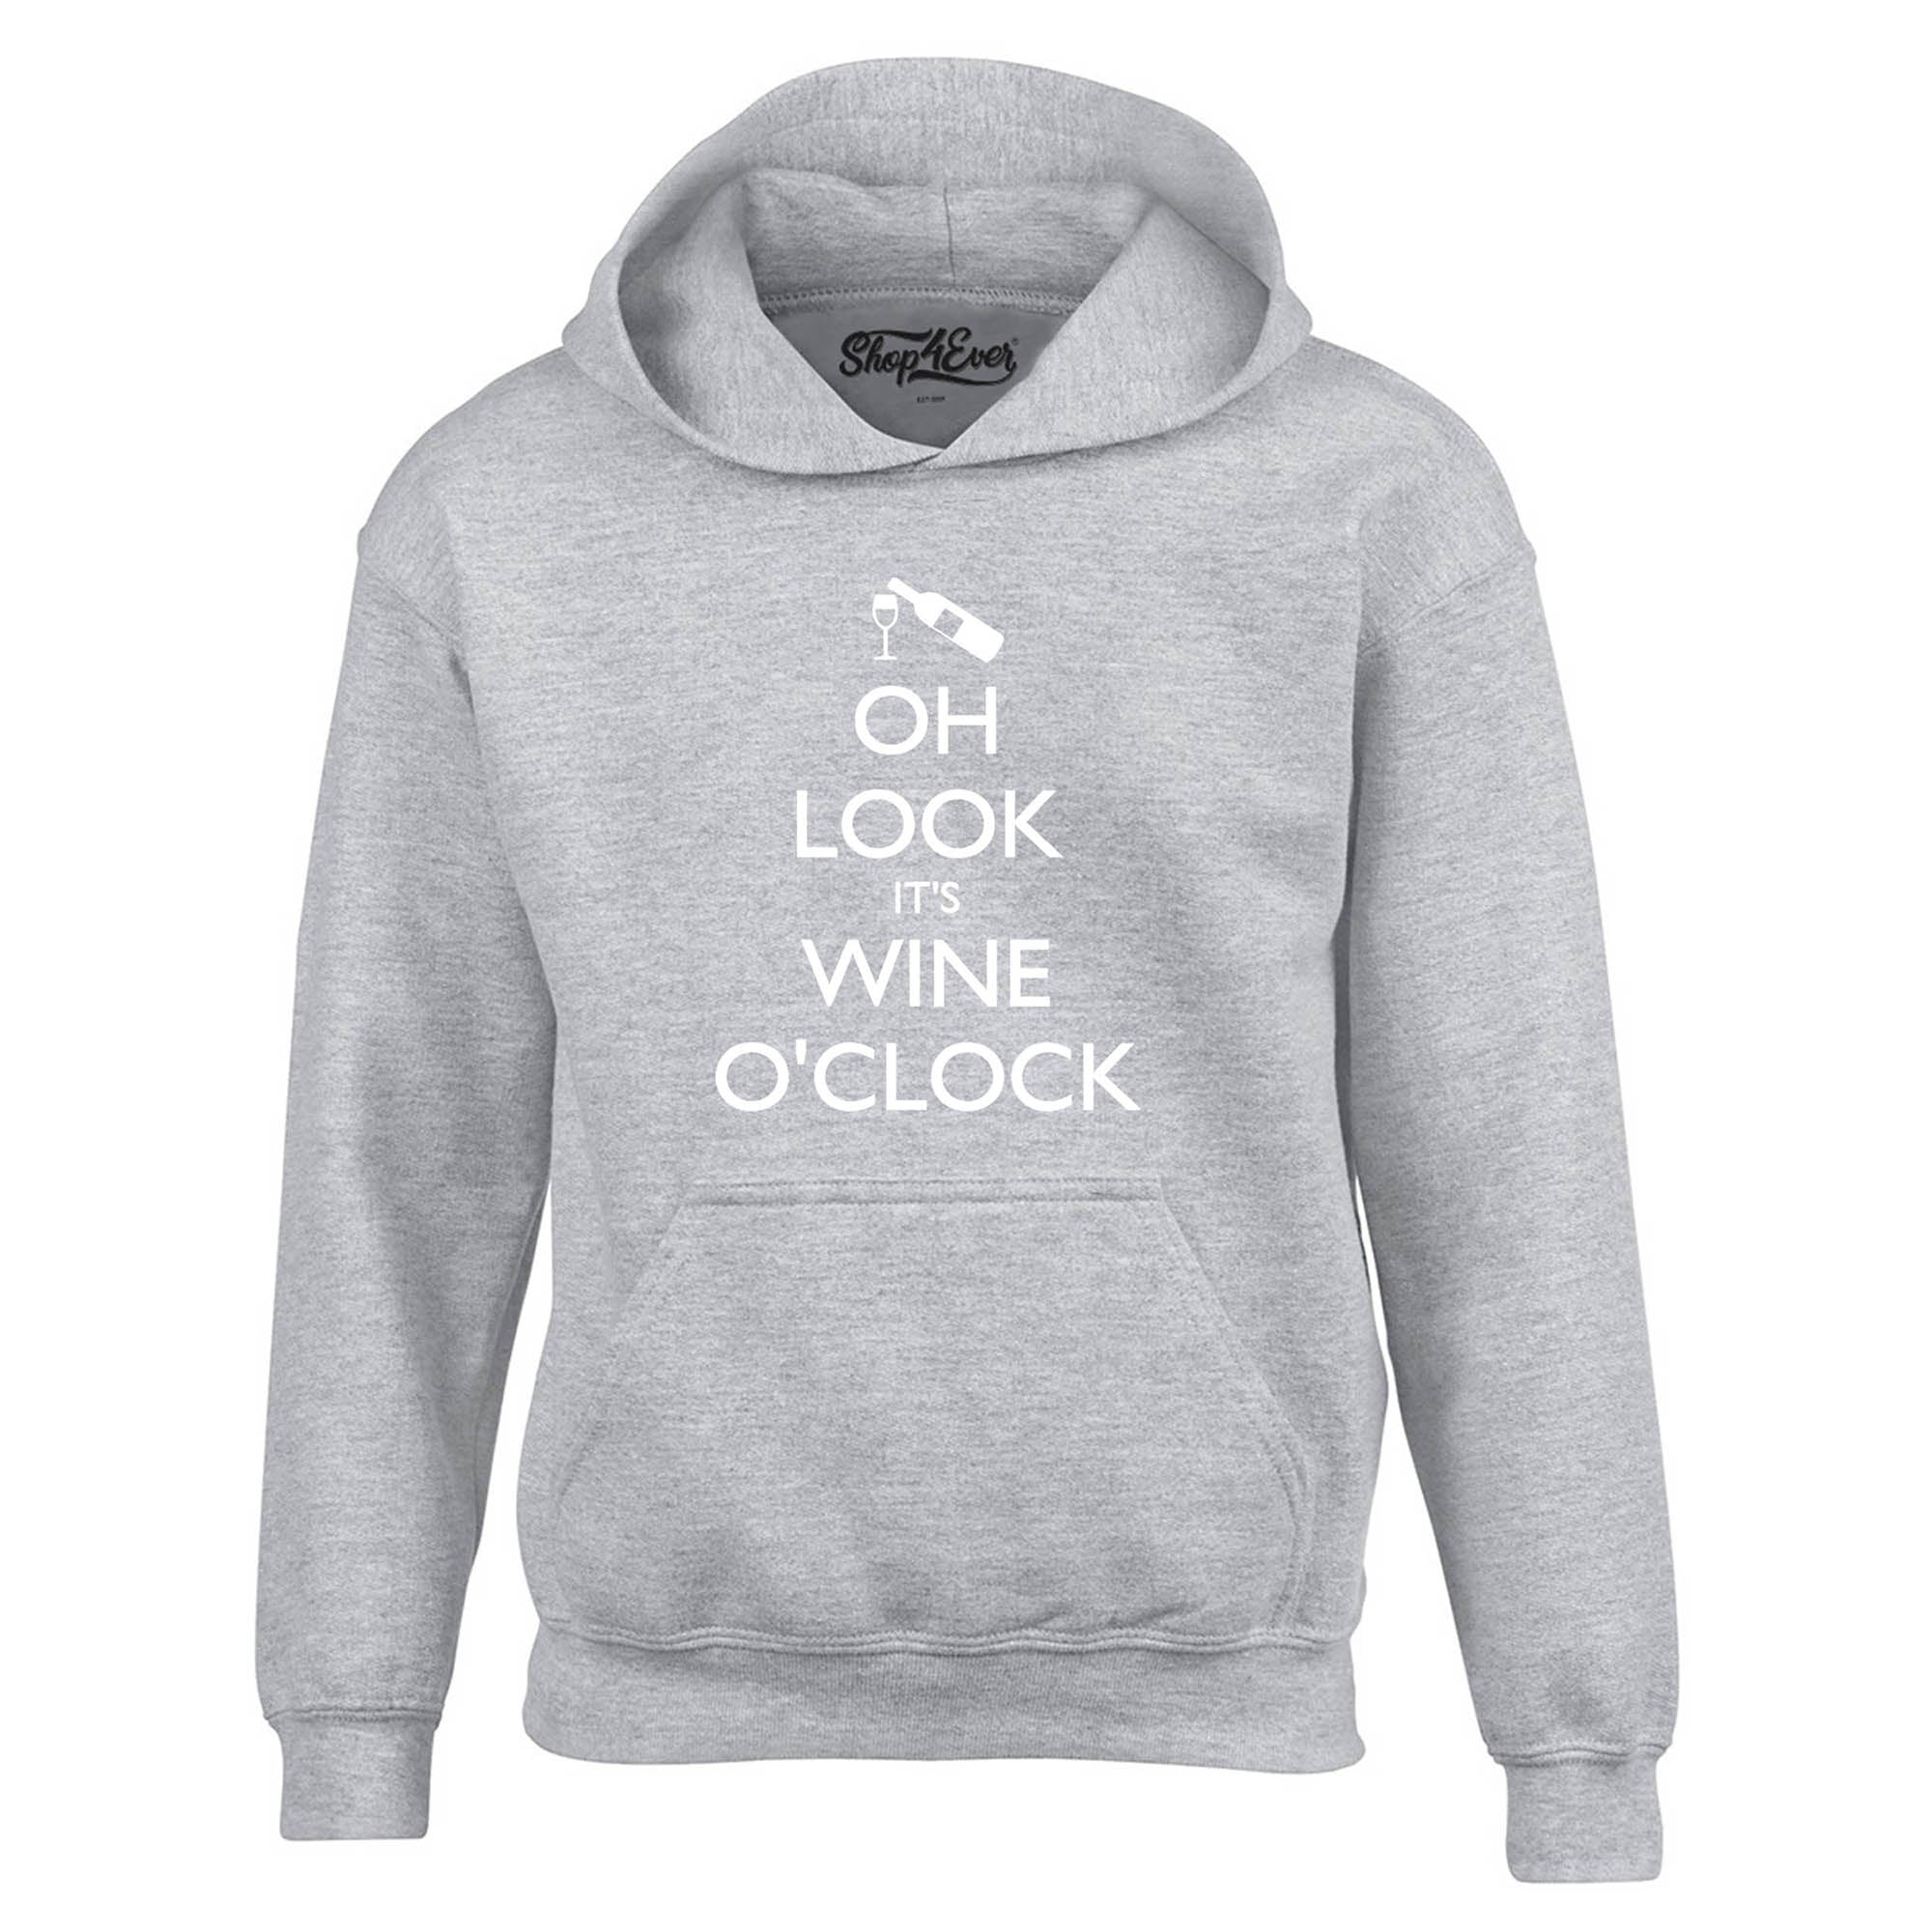 Oh Look It's Wine O'Clock Hoodies Drinking Sweatshirts